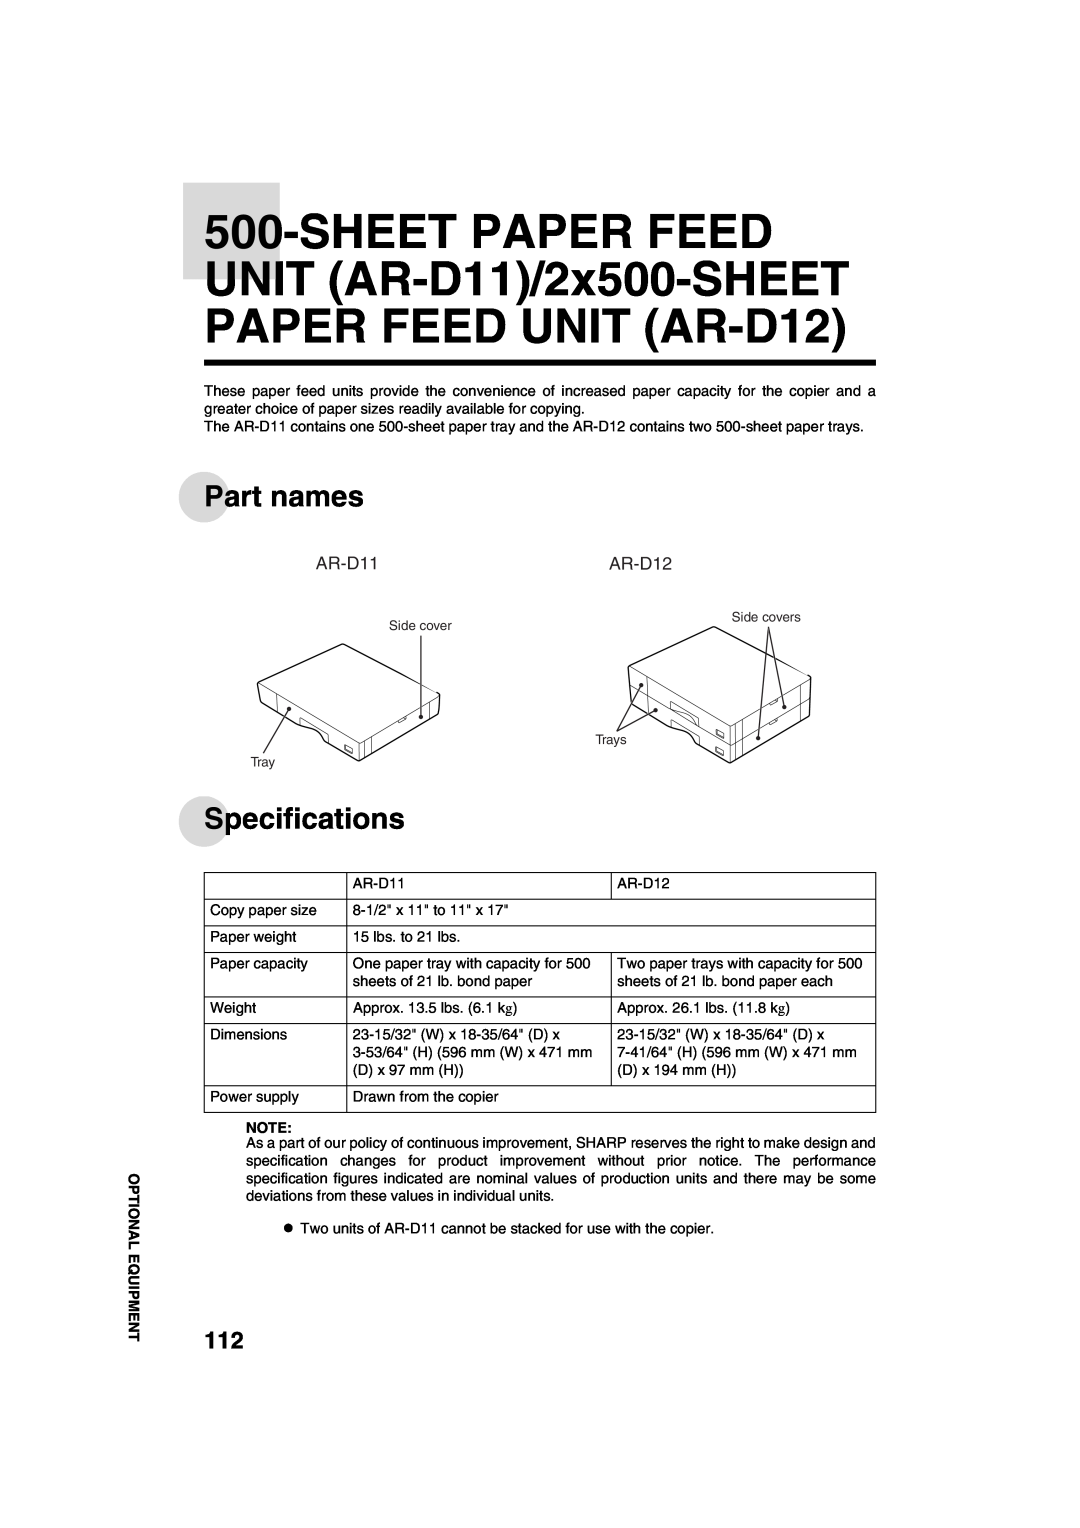 Sharp AR-M208 operation manual SHEET PAPER FEED UNIT AR-D11/2x500-SHEET PAPER FEED UNIT AR-D12, Part names, Specifications 